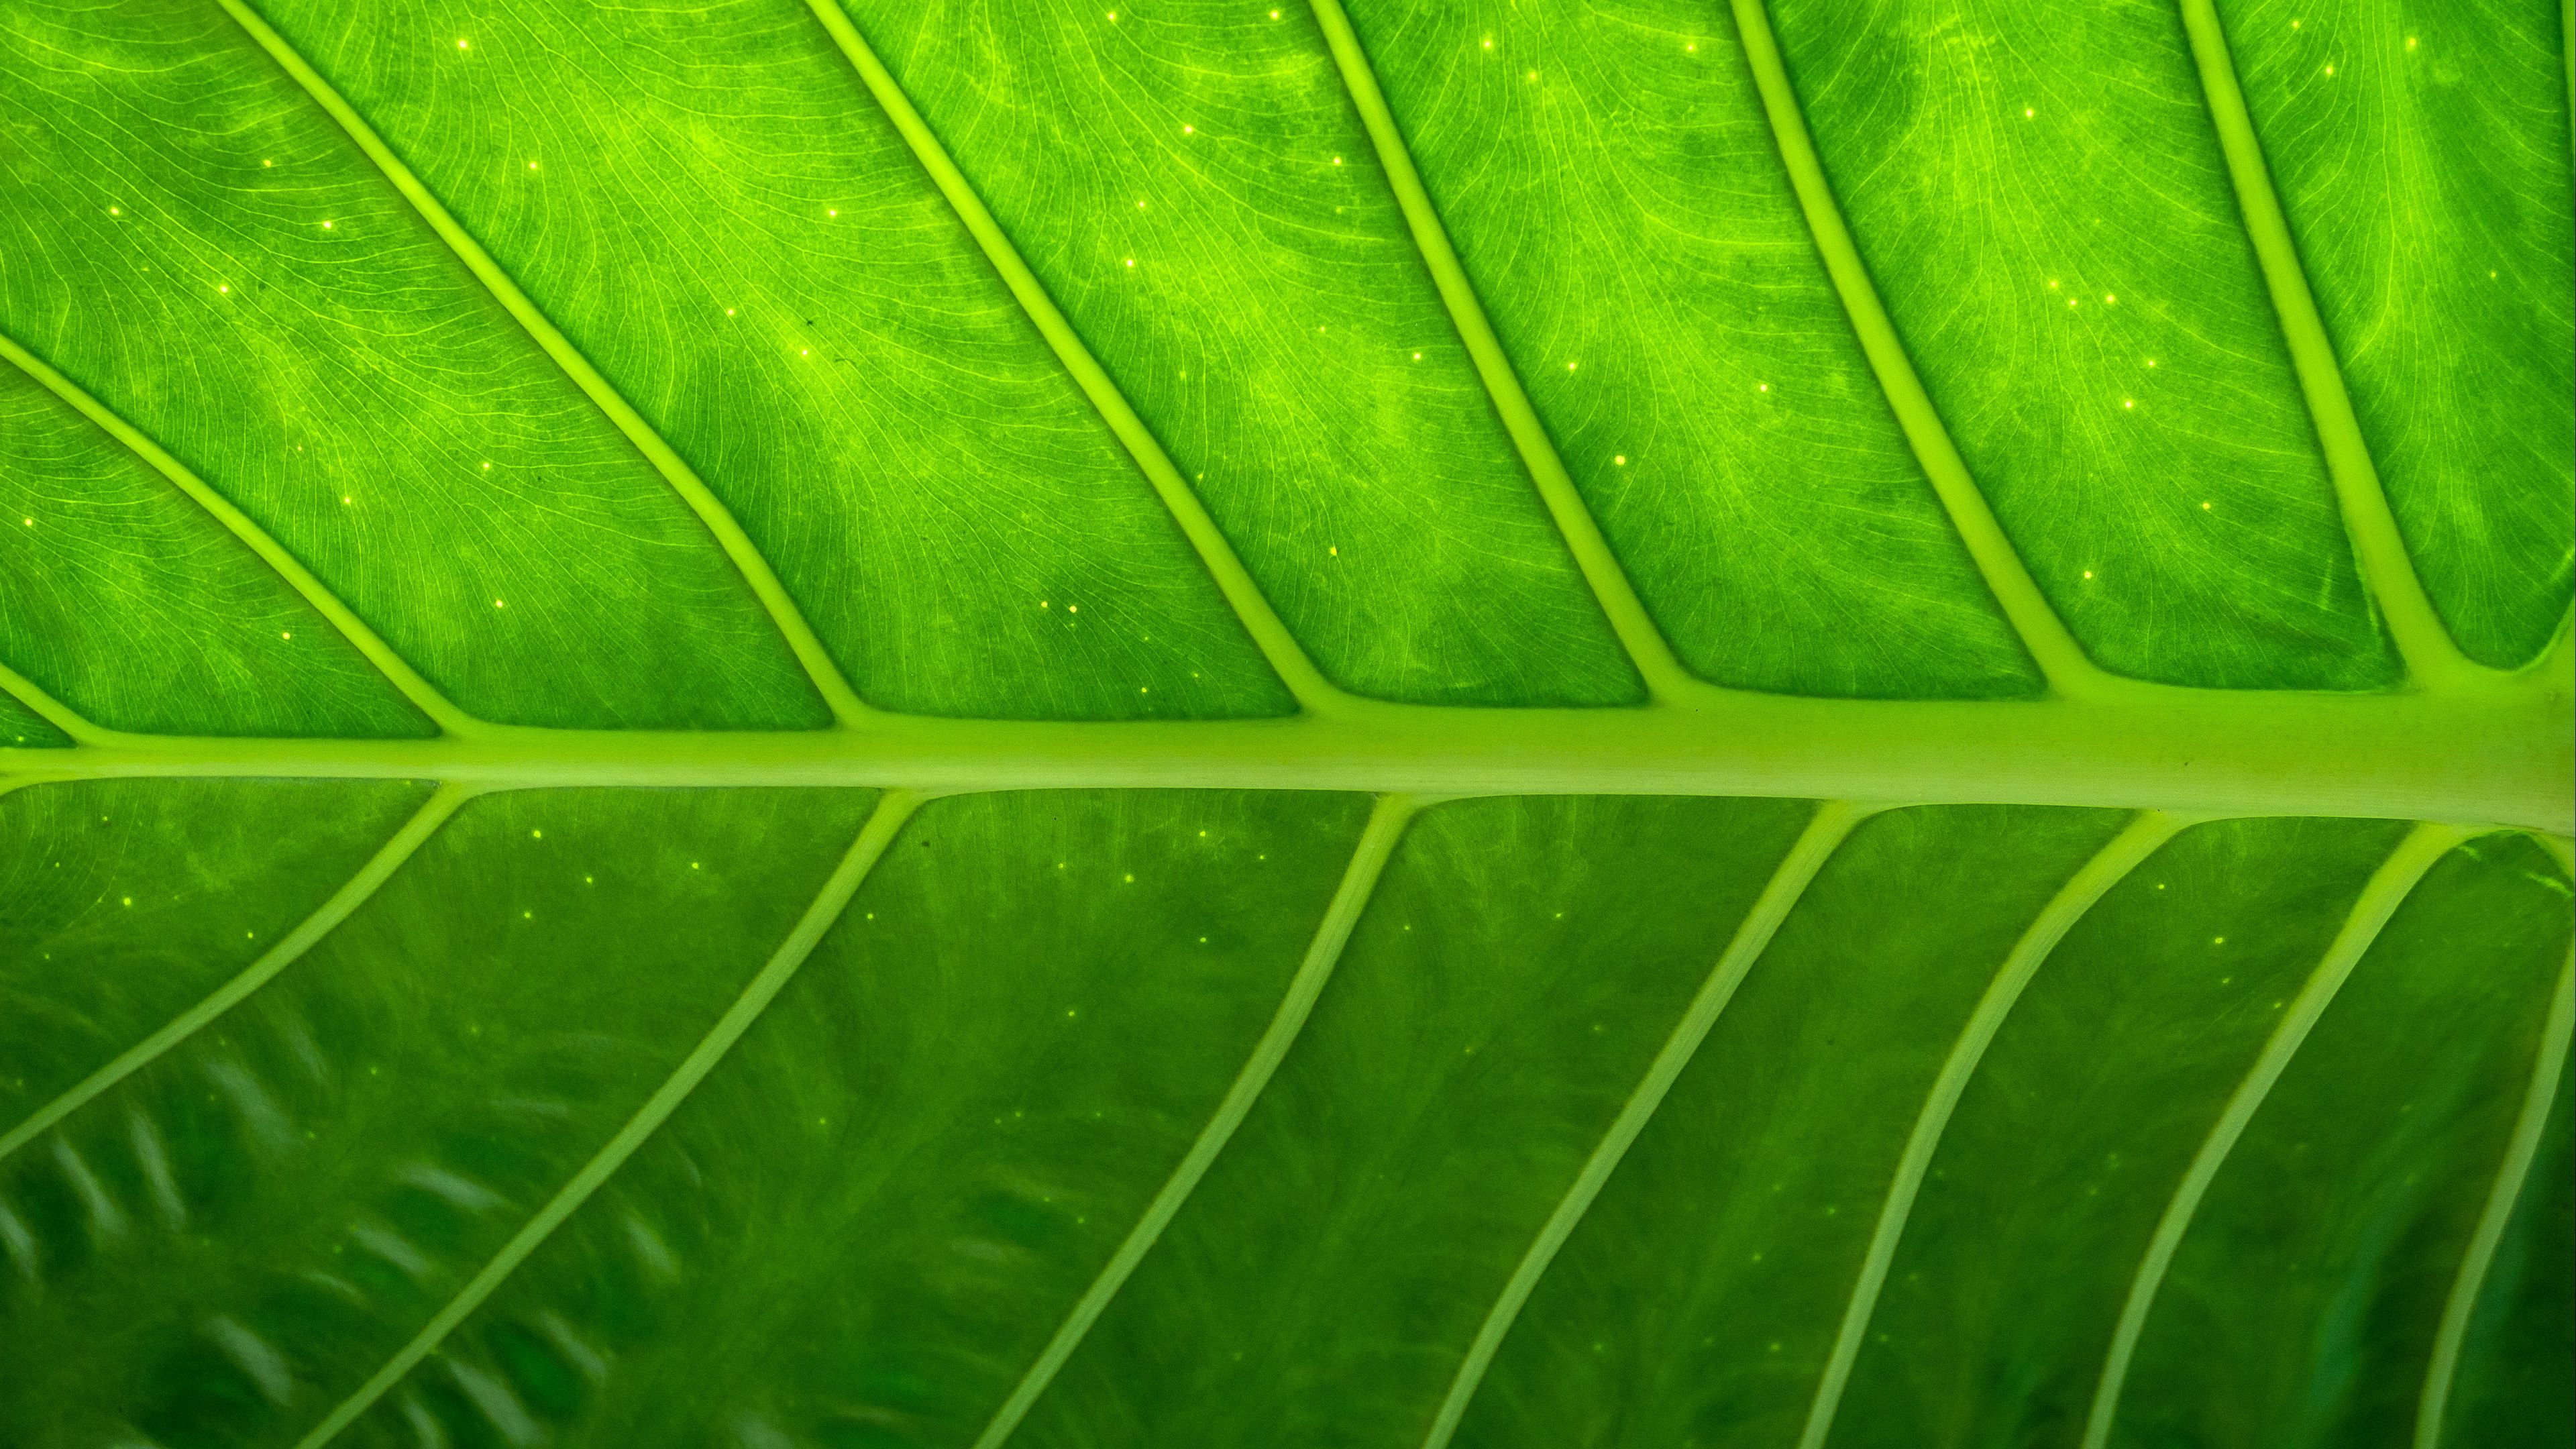 Download wallpaper 3840x2160 plant, leaf, texture 4k uhd 16:9 hd background